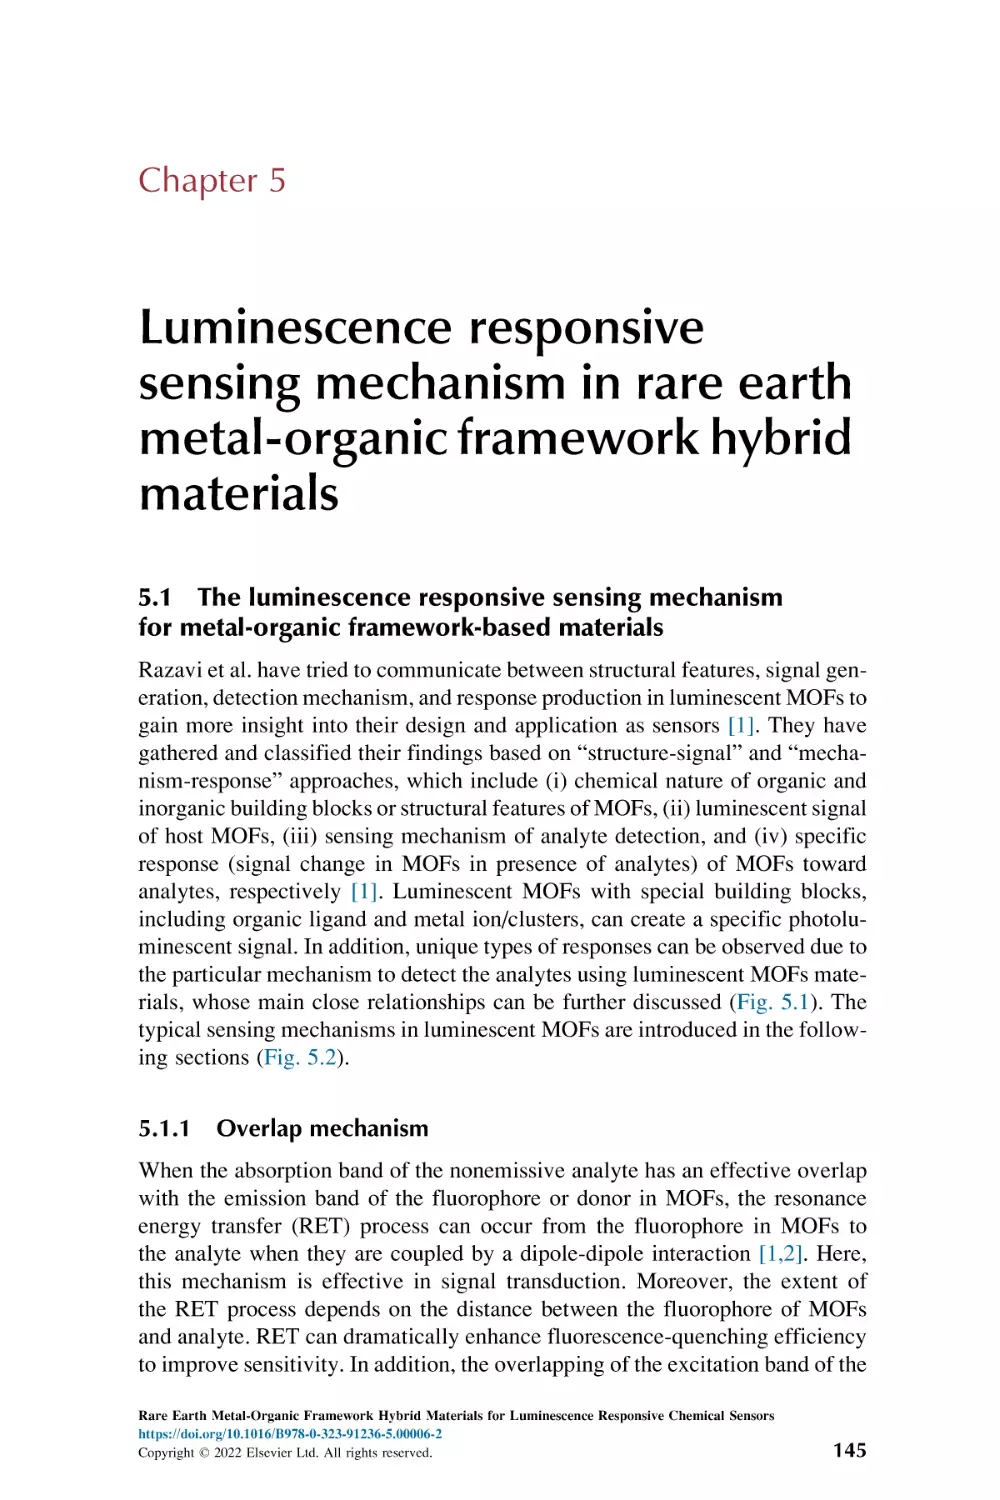 Chapter 5
5.1. The luminescence responsive sensing mechanism for metal-organic framework-based materials
5.1.1. Overlap mechanism